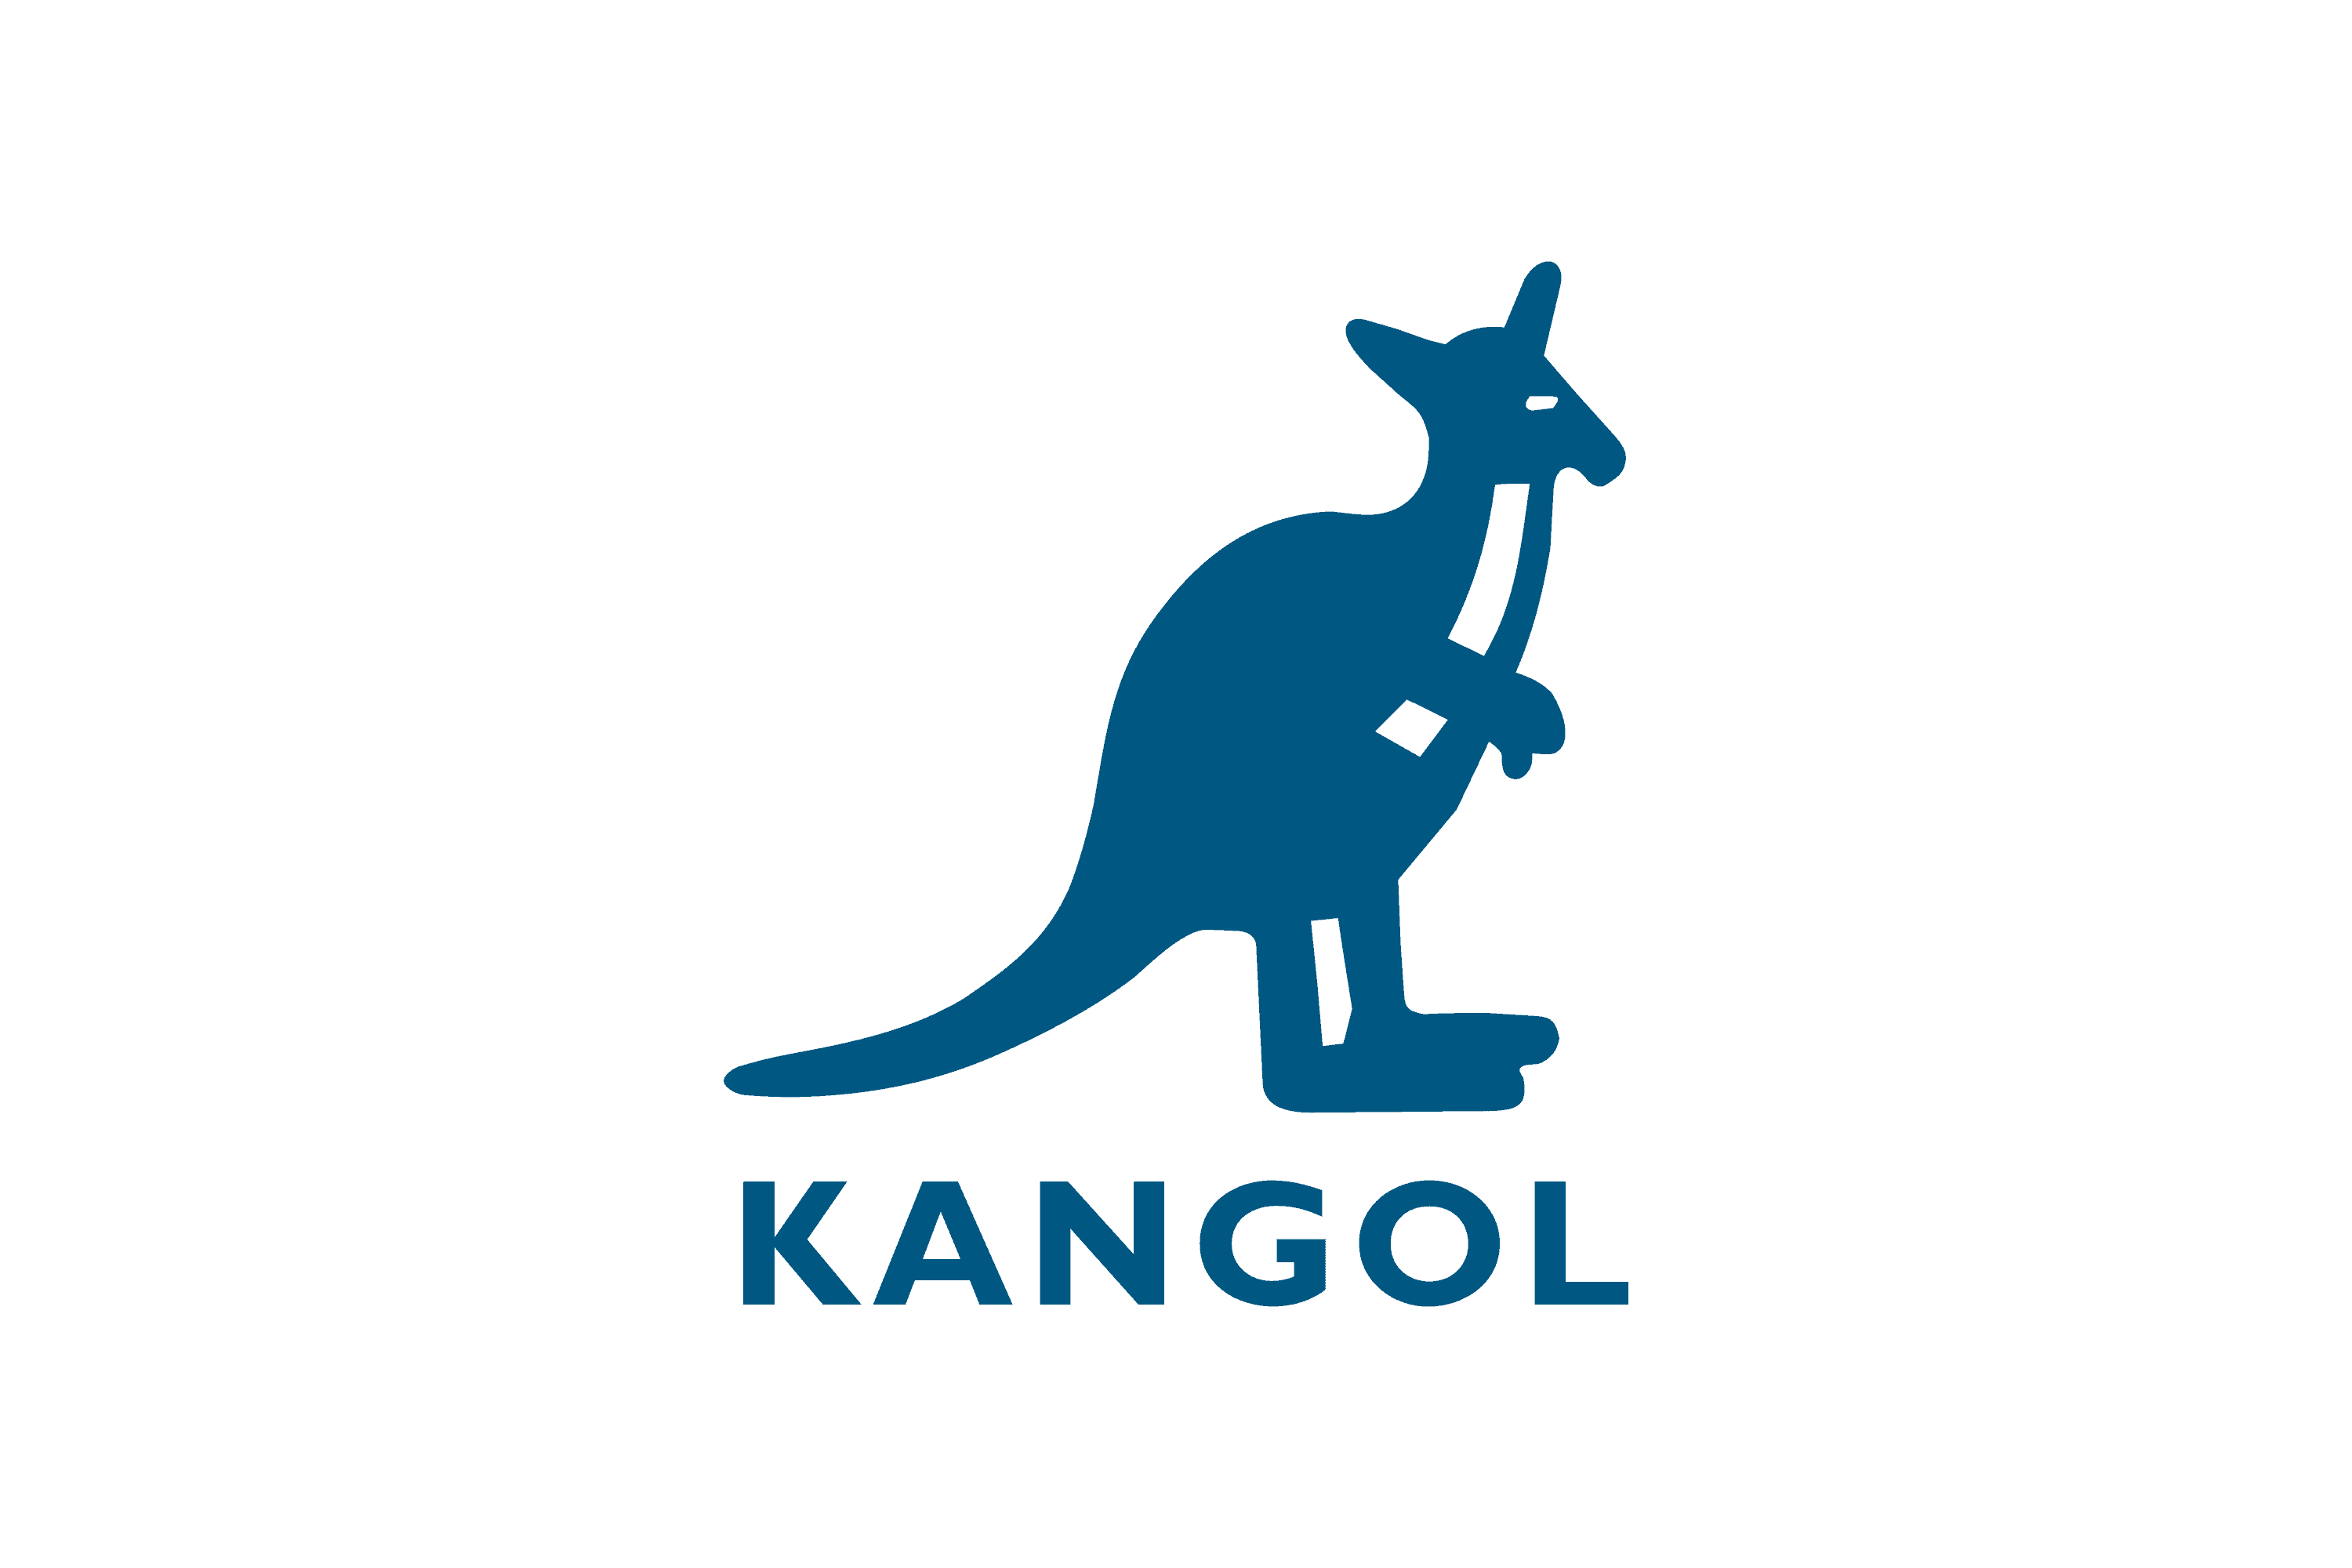 KANGOL Student Discount Logo